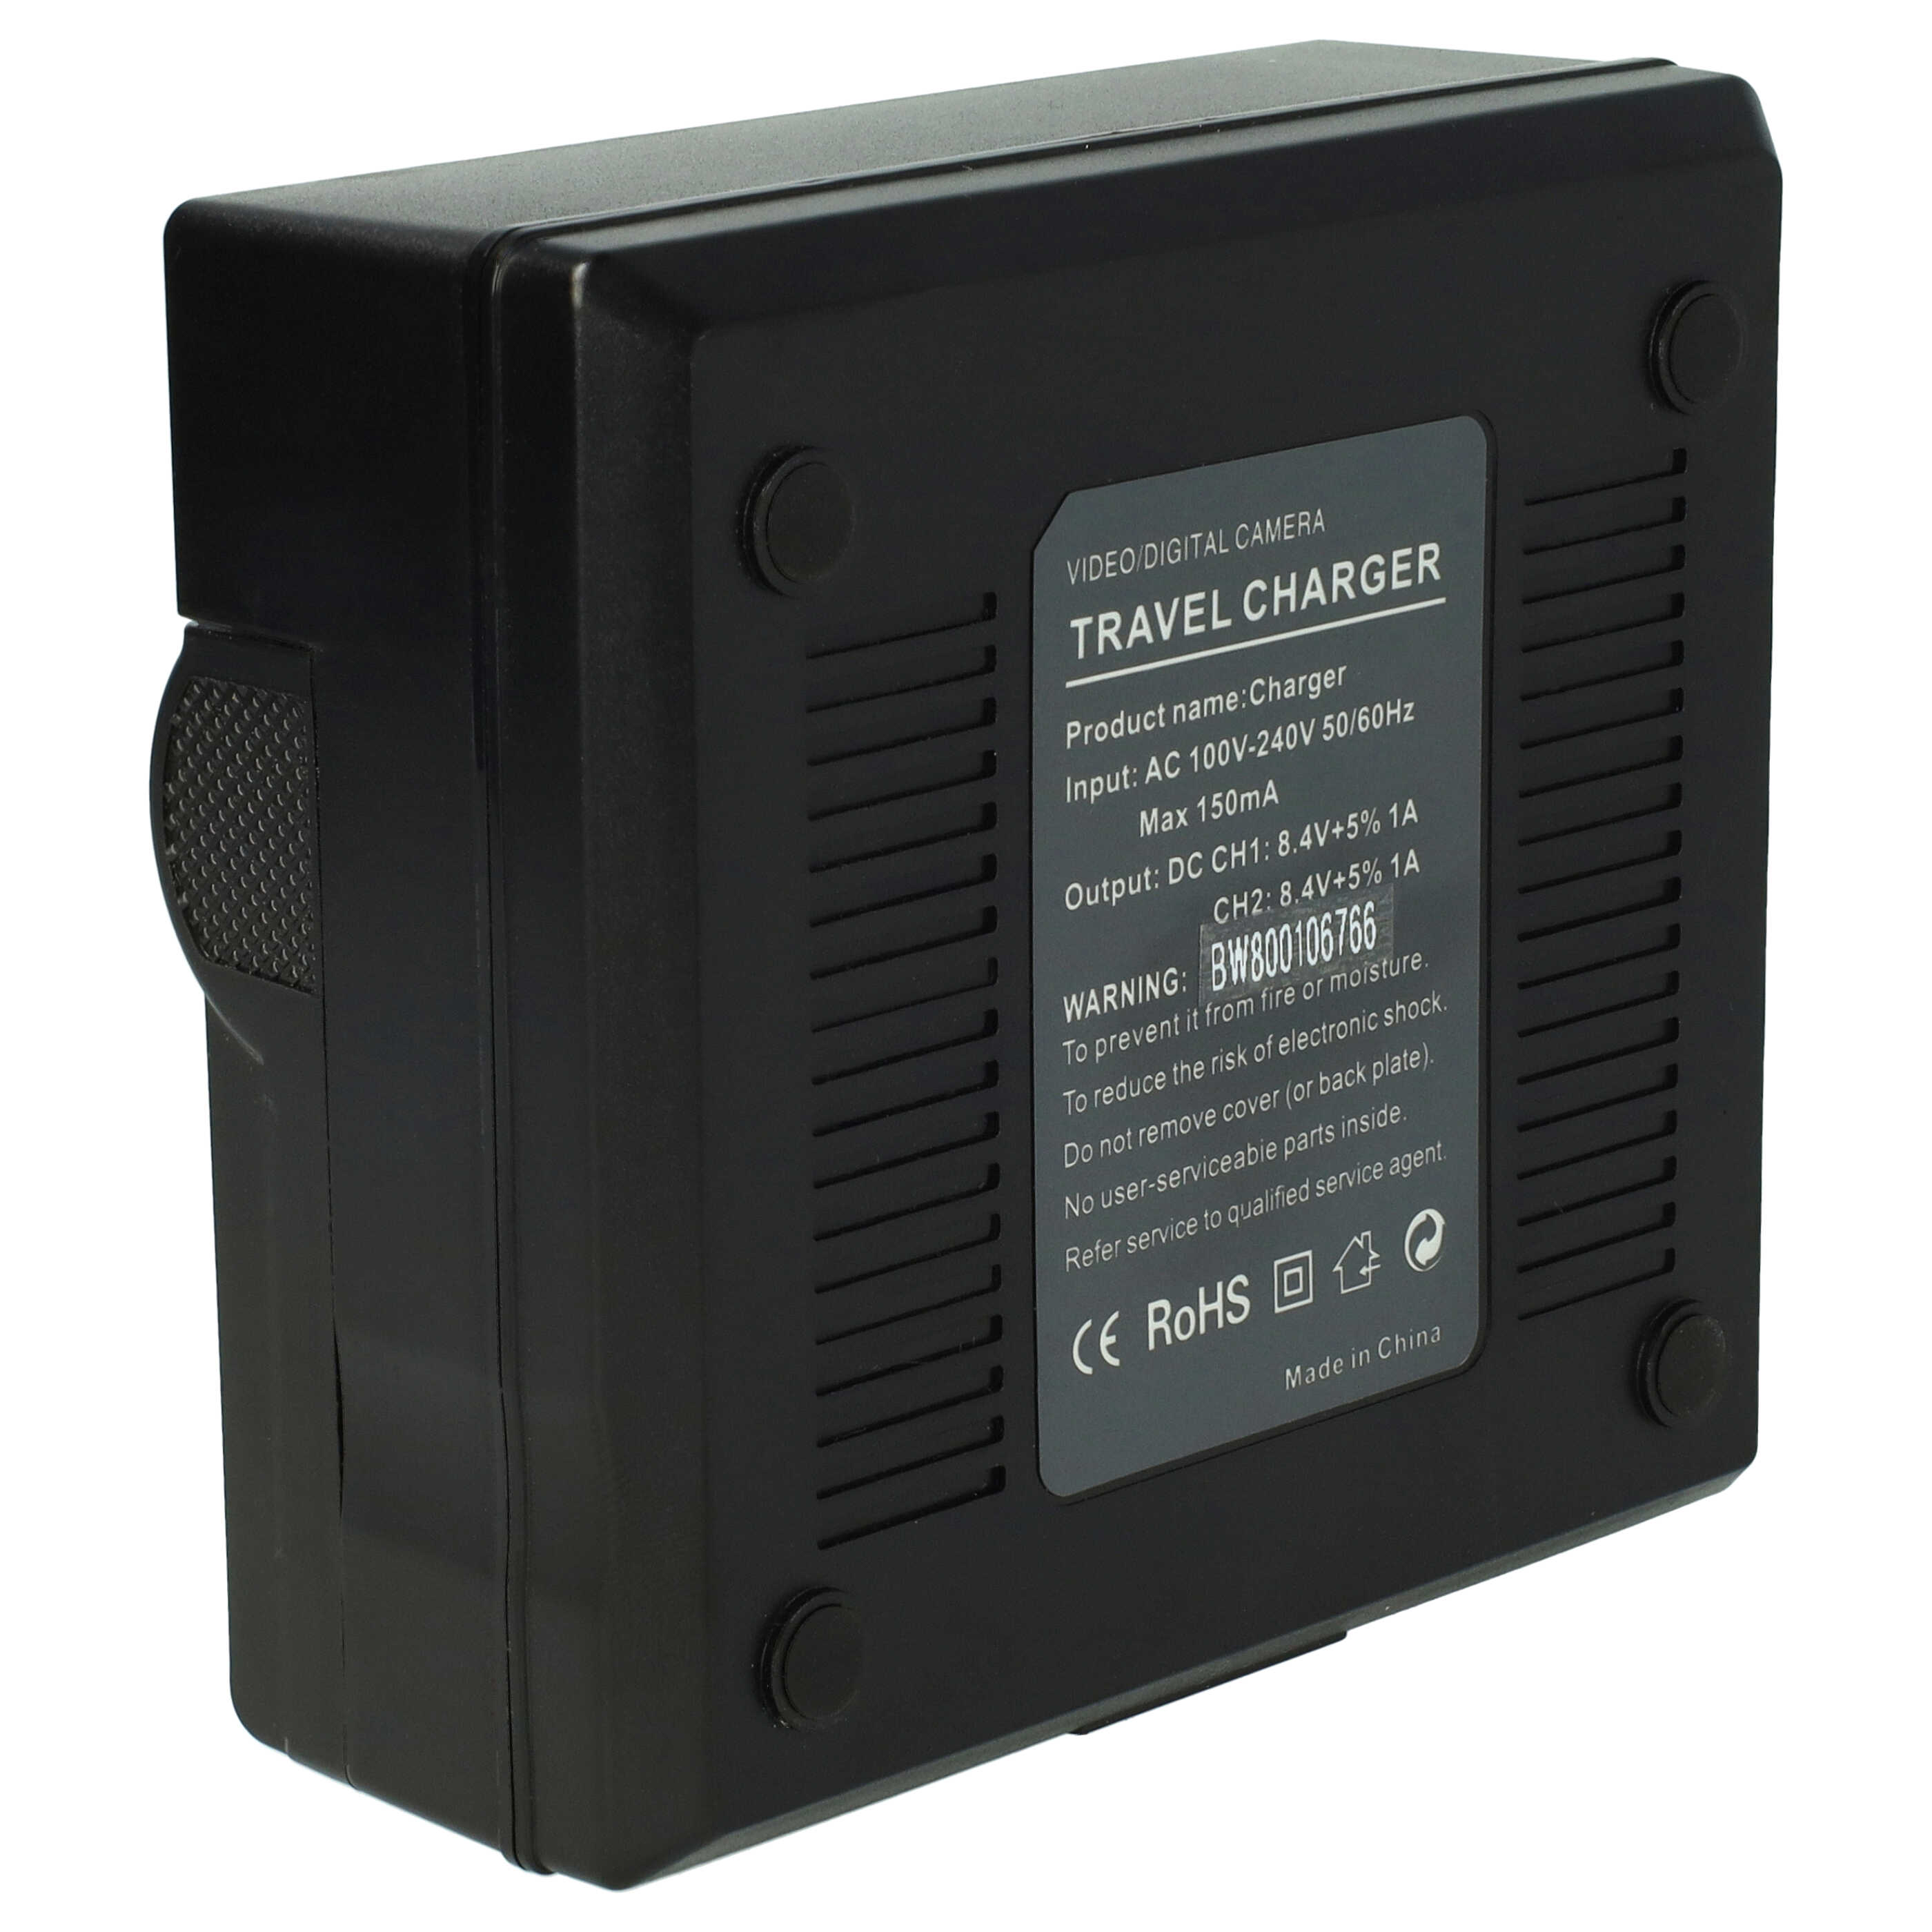 Ładowarka do aparatu Pocket Cinema 4K i innych - ładowarka akumulatora 0.5 / 0.9 A, 4.2/8.4 V